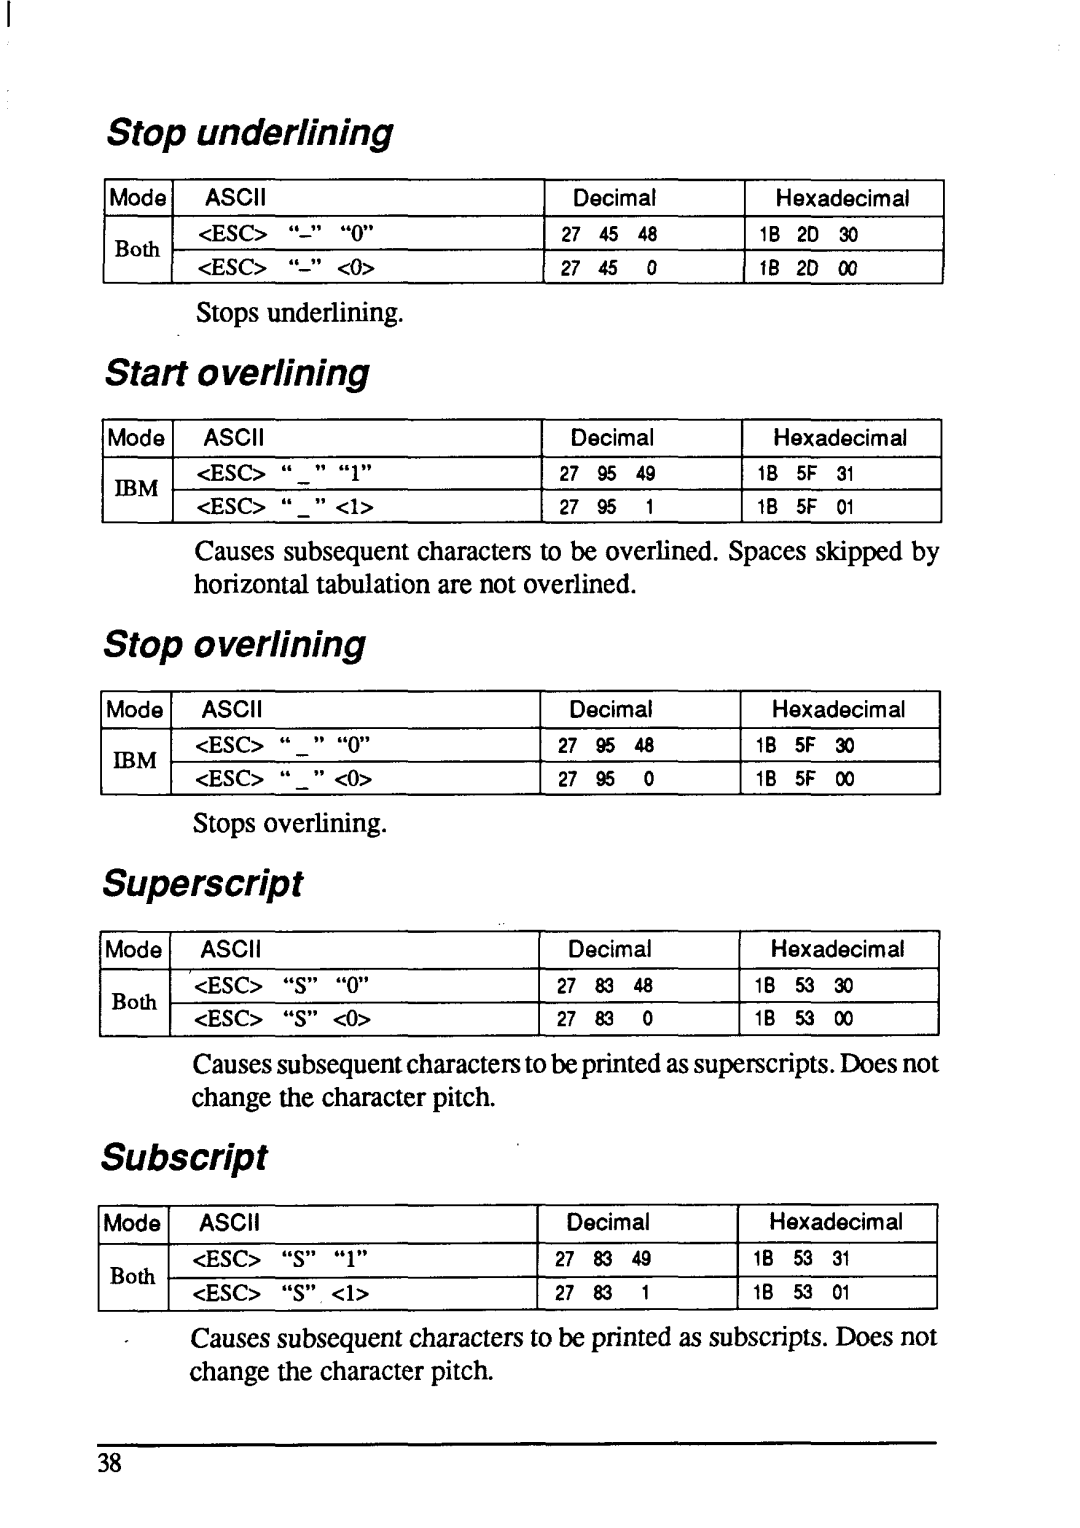 Star Micronics NX-1001 manual Stop underlining, Start overlining, Stop overlining, Subscript, Superscript 